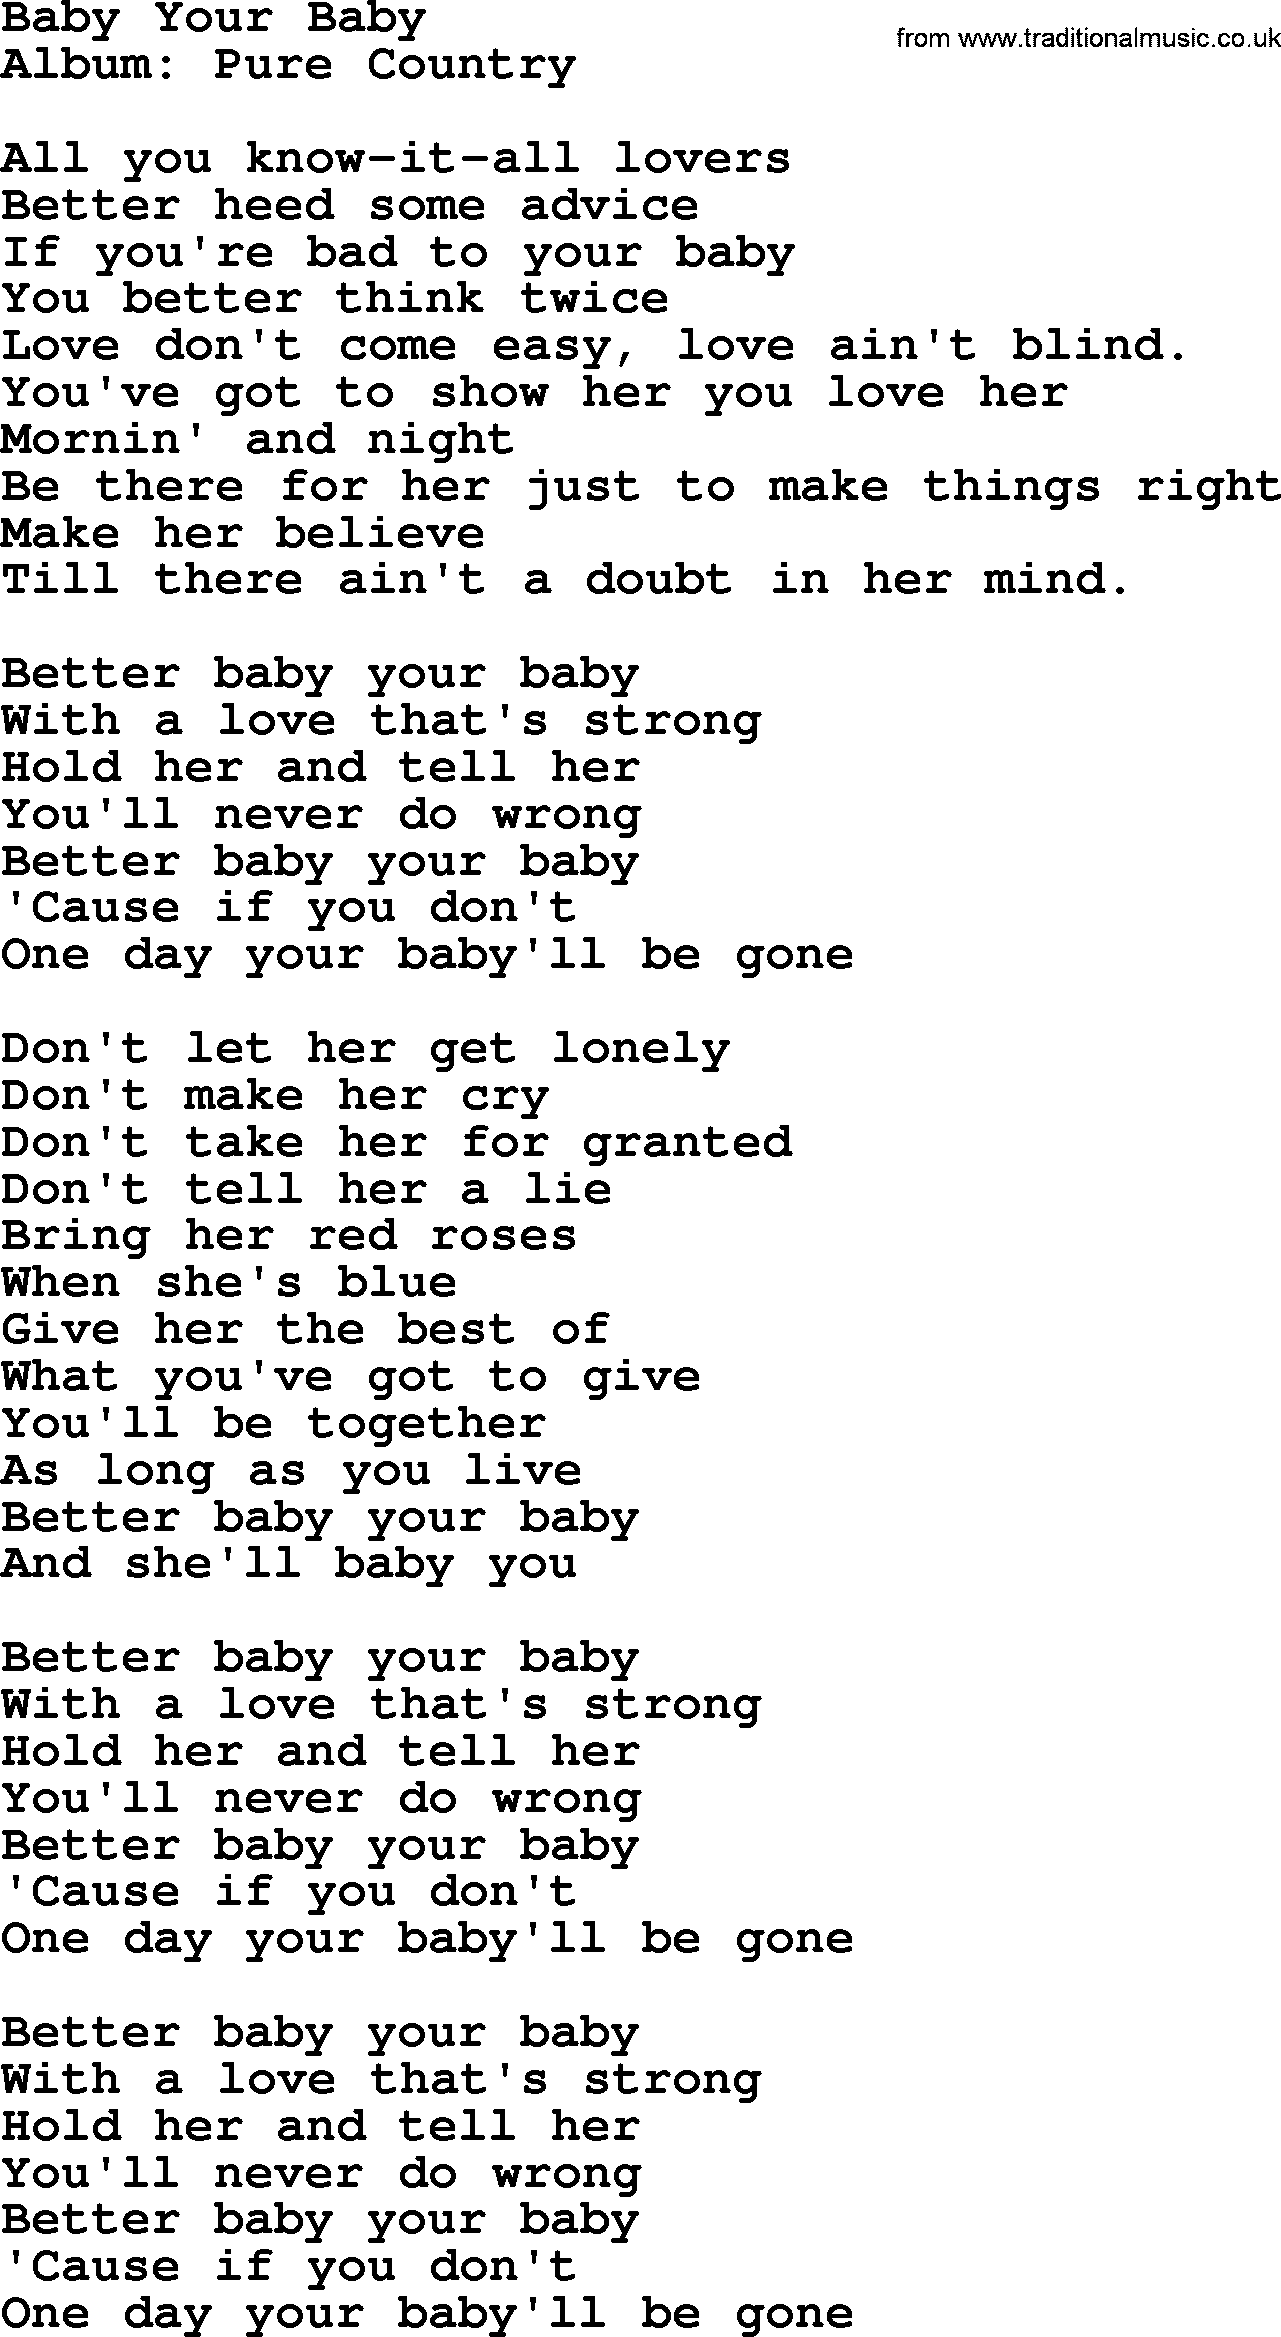 George Strait song: Baby Your Baby, lyrics